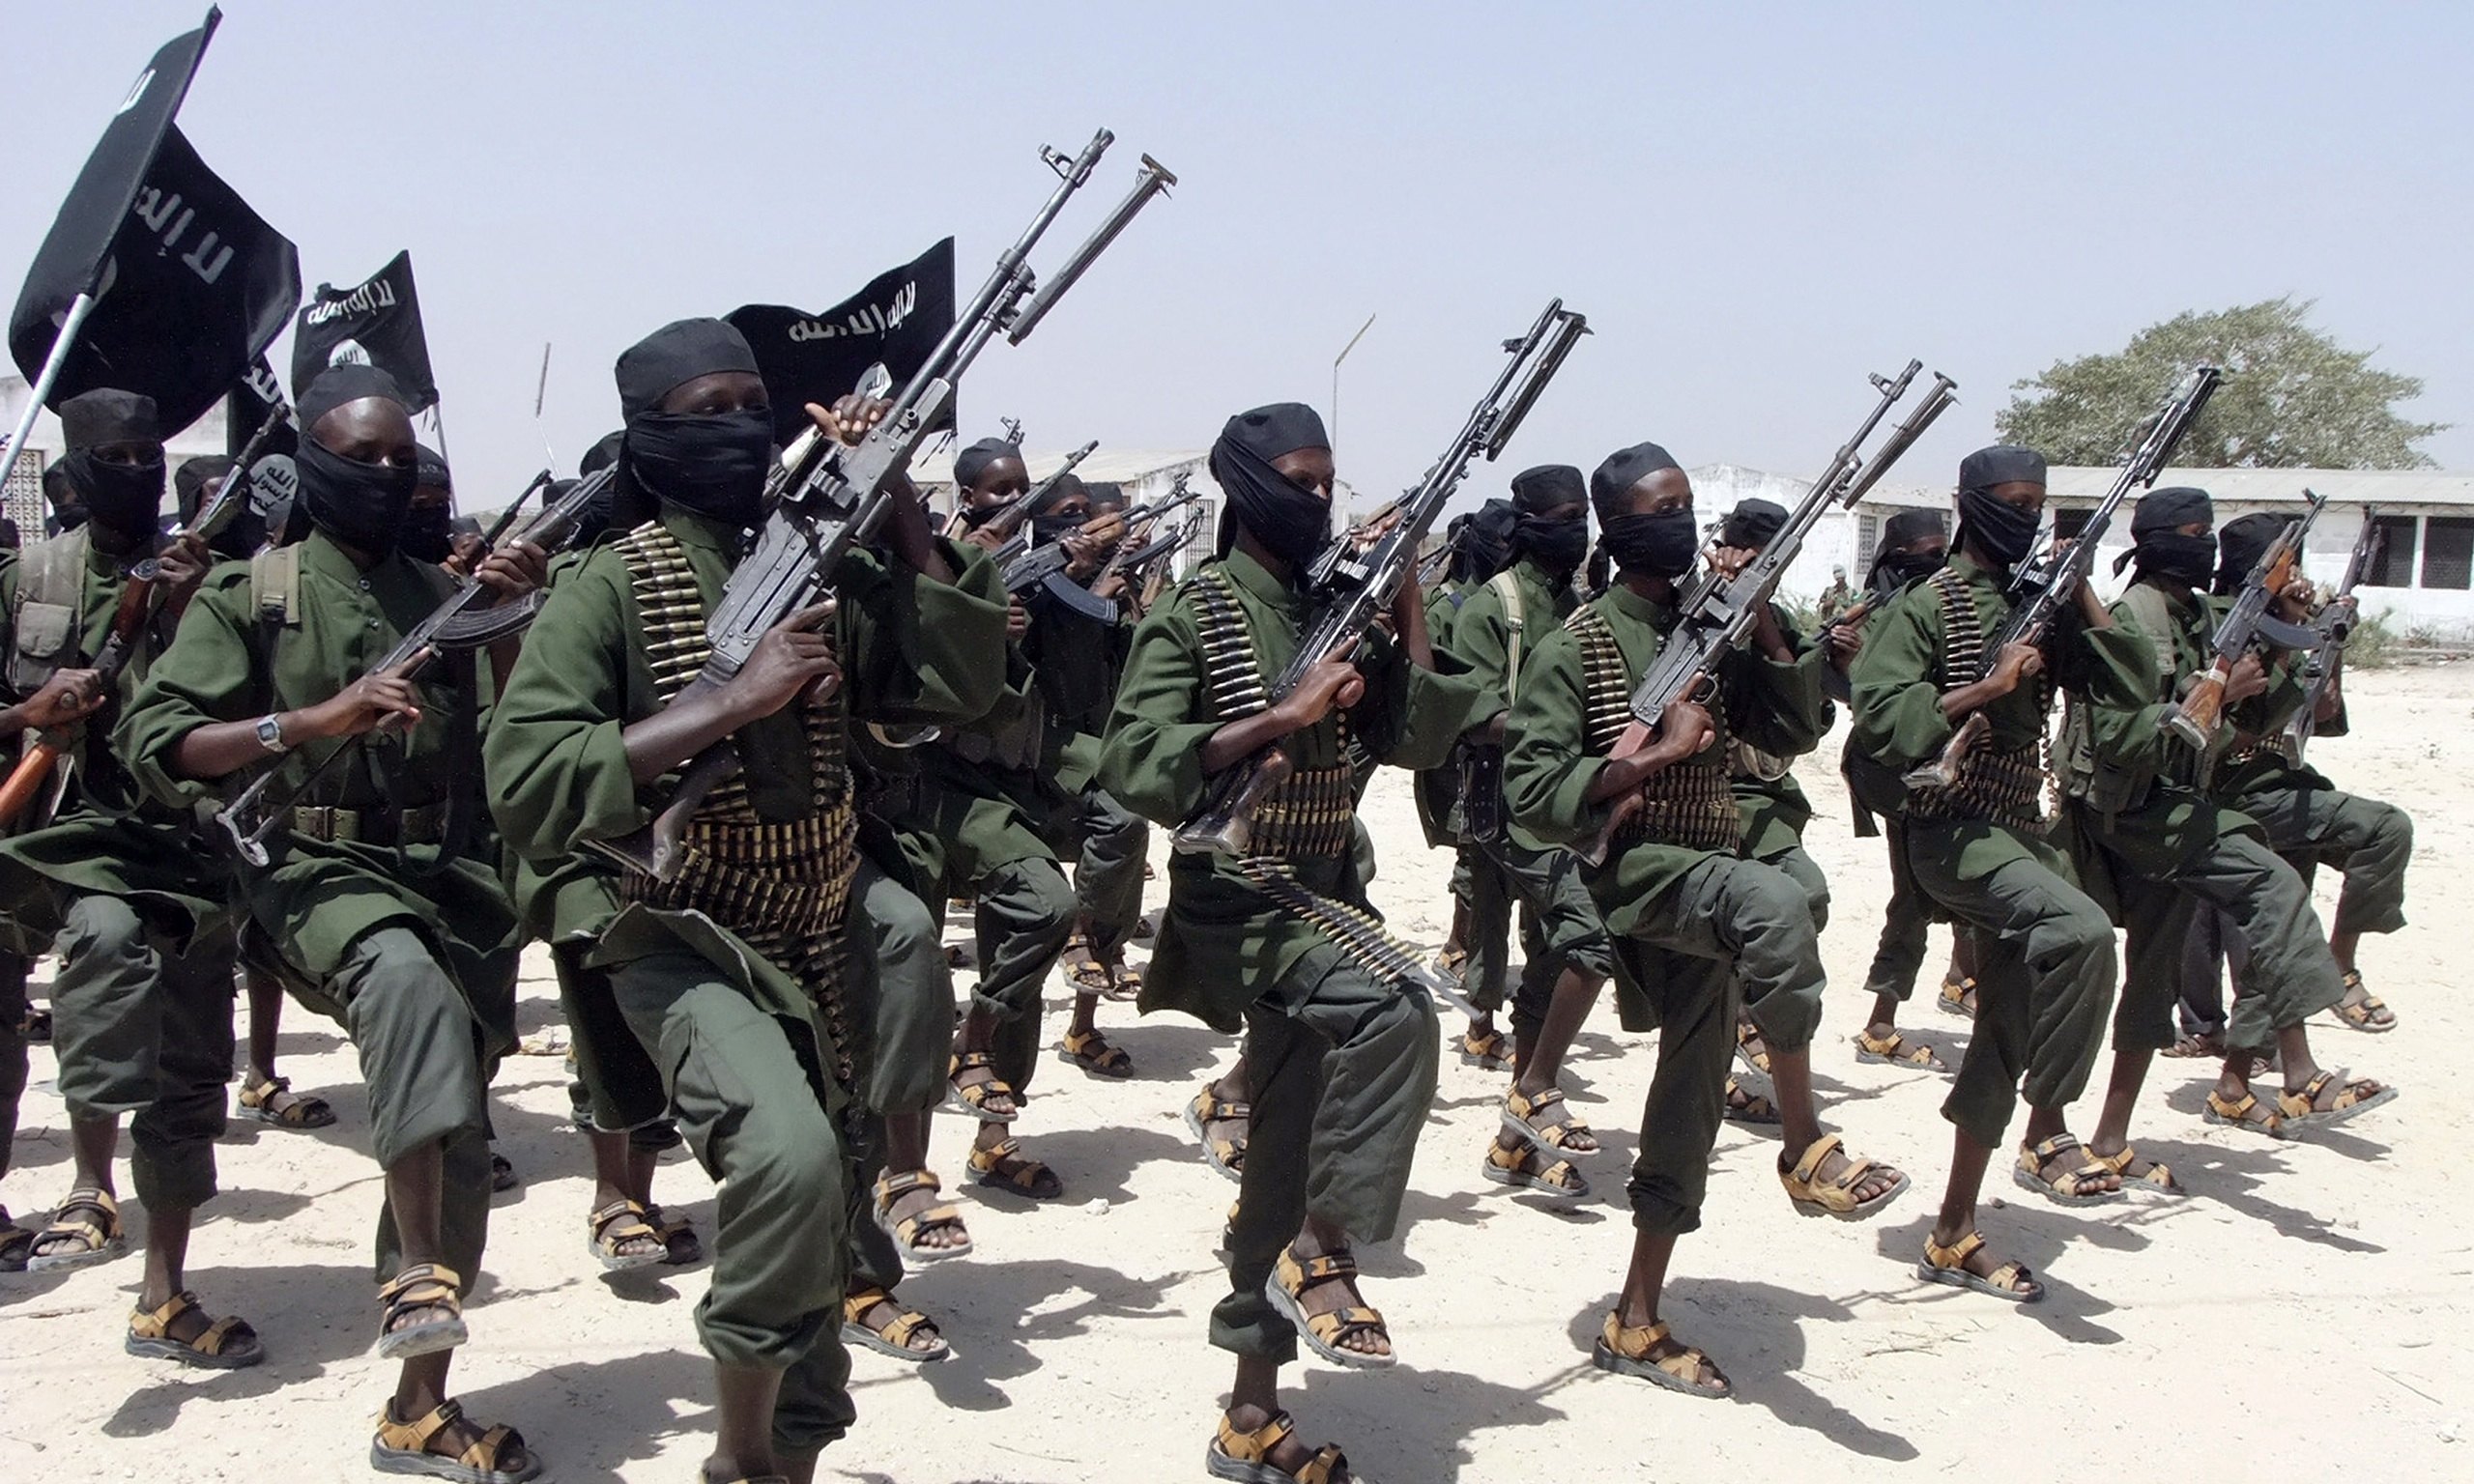 Somalia: Rampant Al Shabaab Attacks Raise Security Concerns (VIDEO)